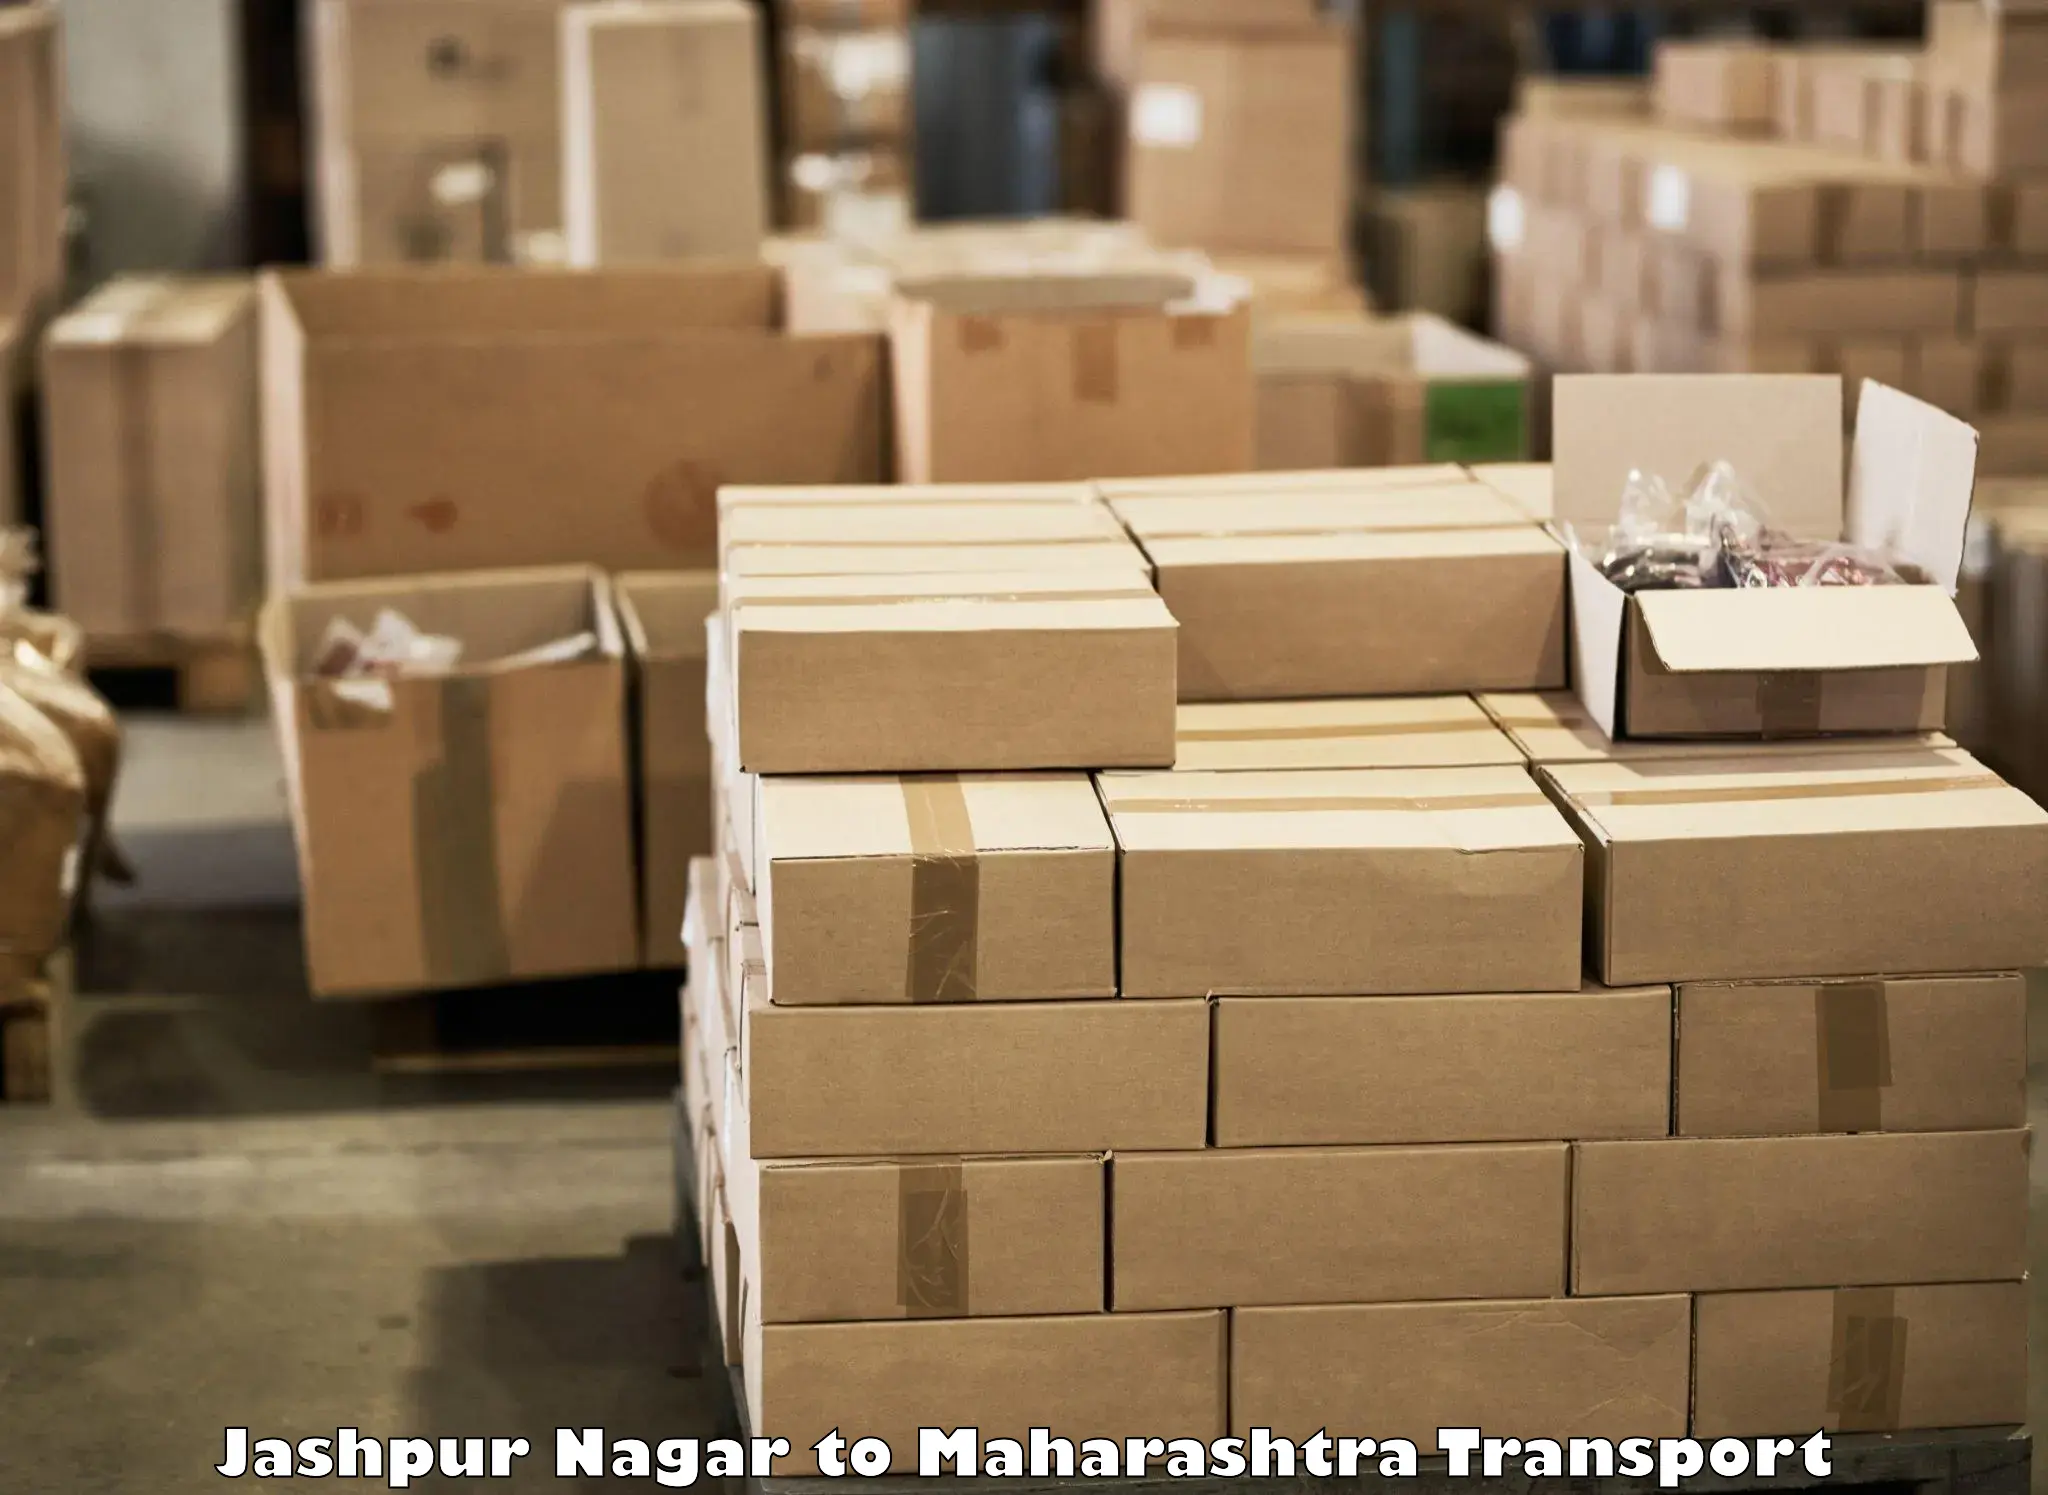 Delivery service Jashpur Nagar to Virar